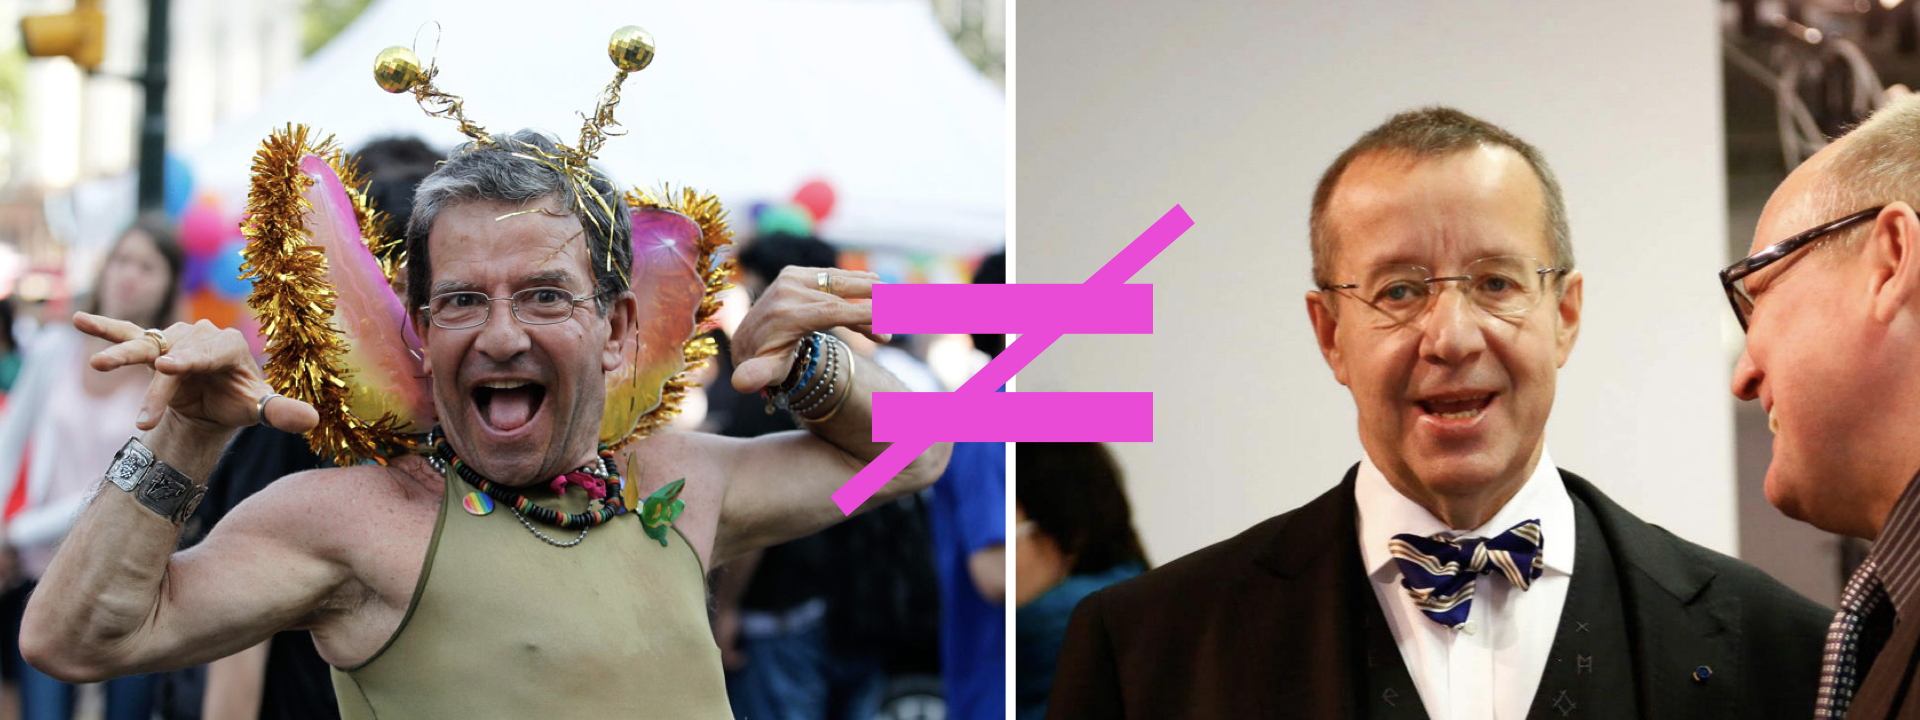 Misleading homophobic memes target former Estonian president